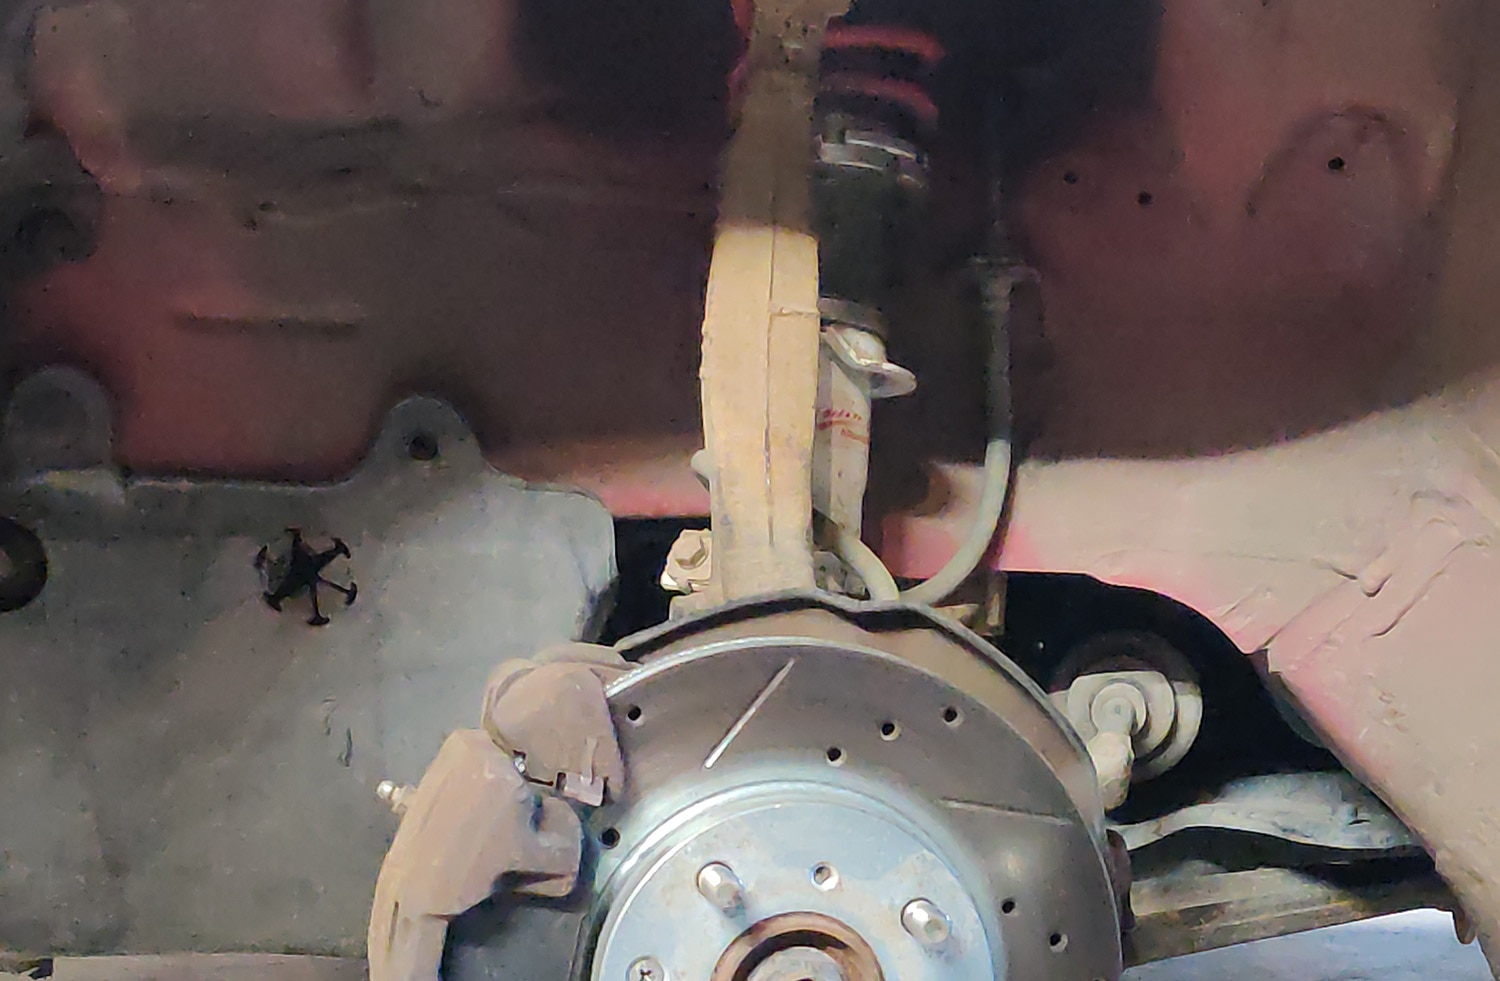 Suspension and braking mechanism in wheel well of vehicle